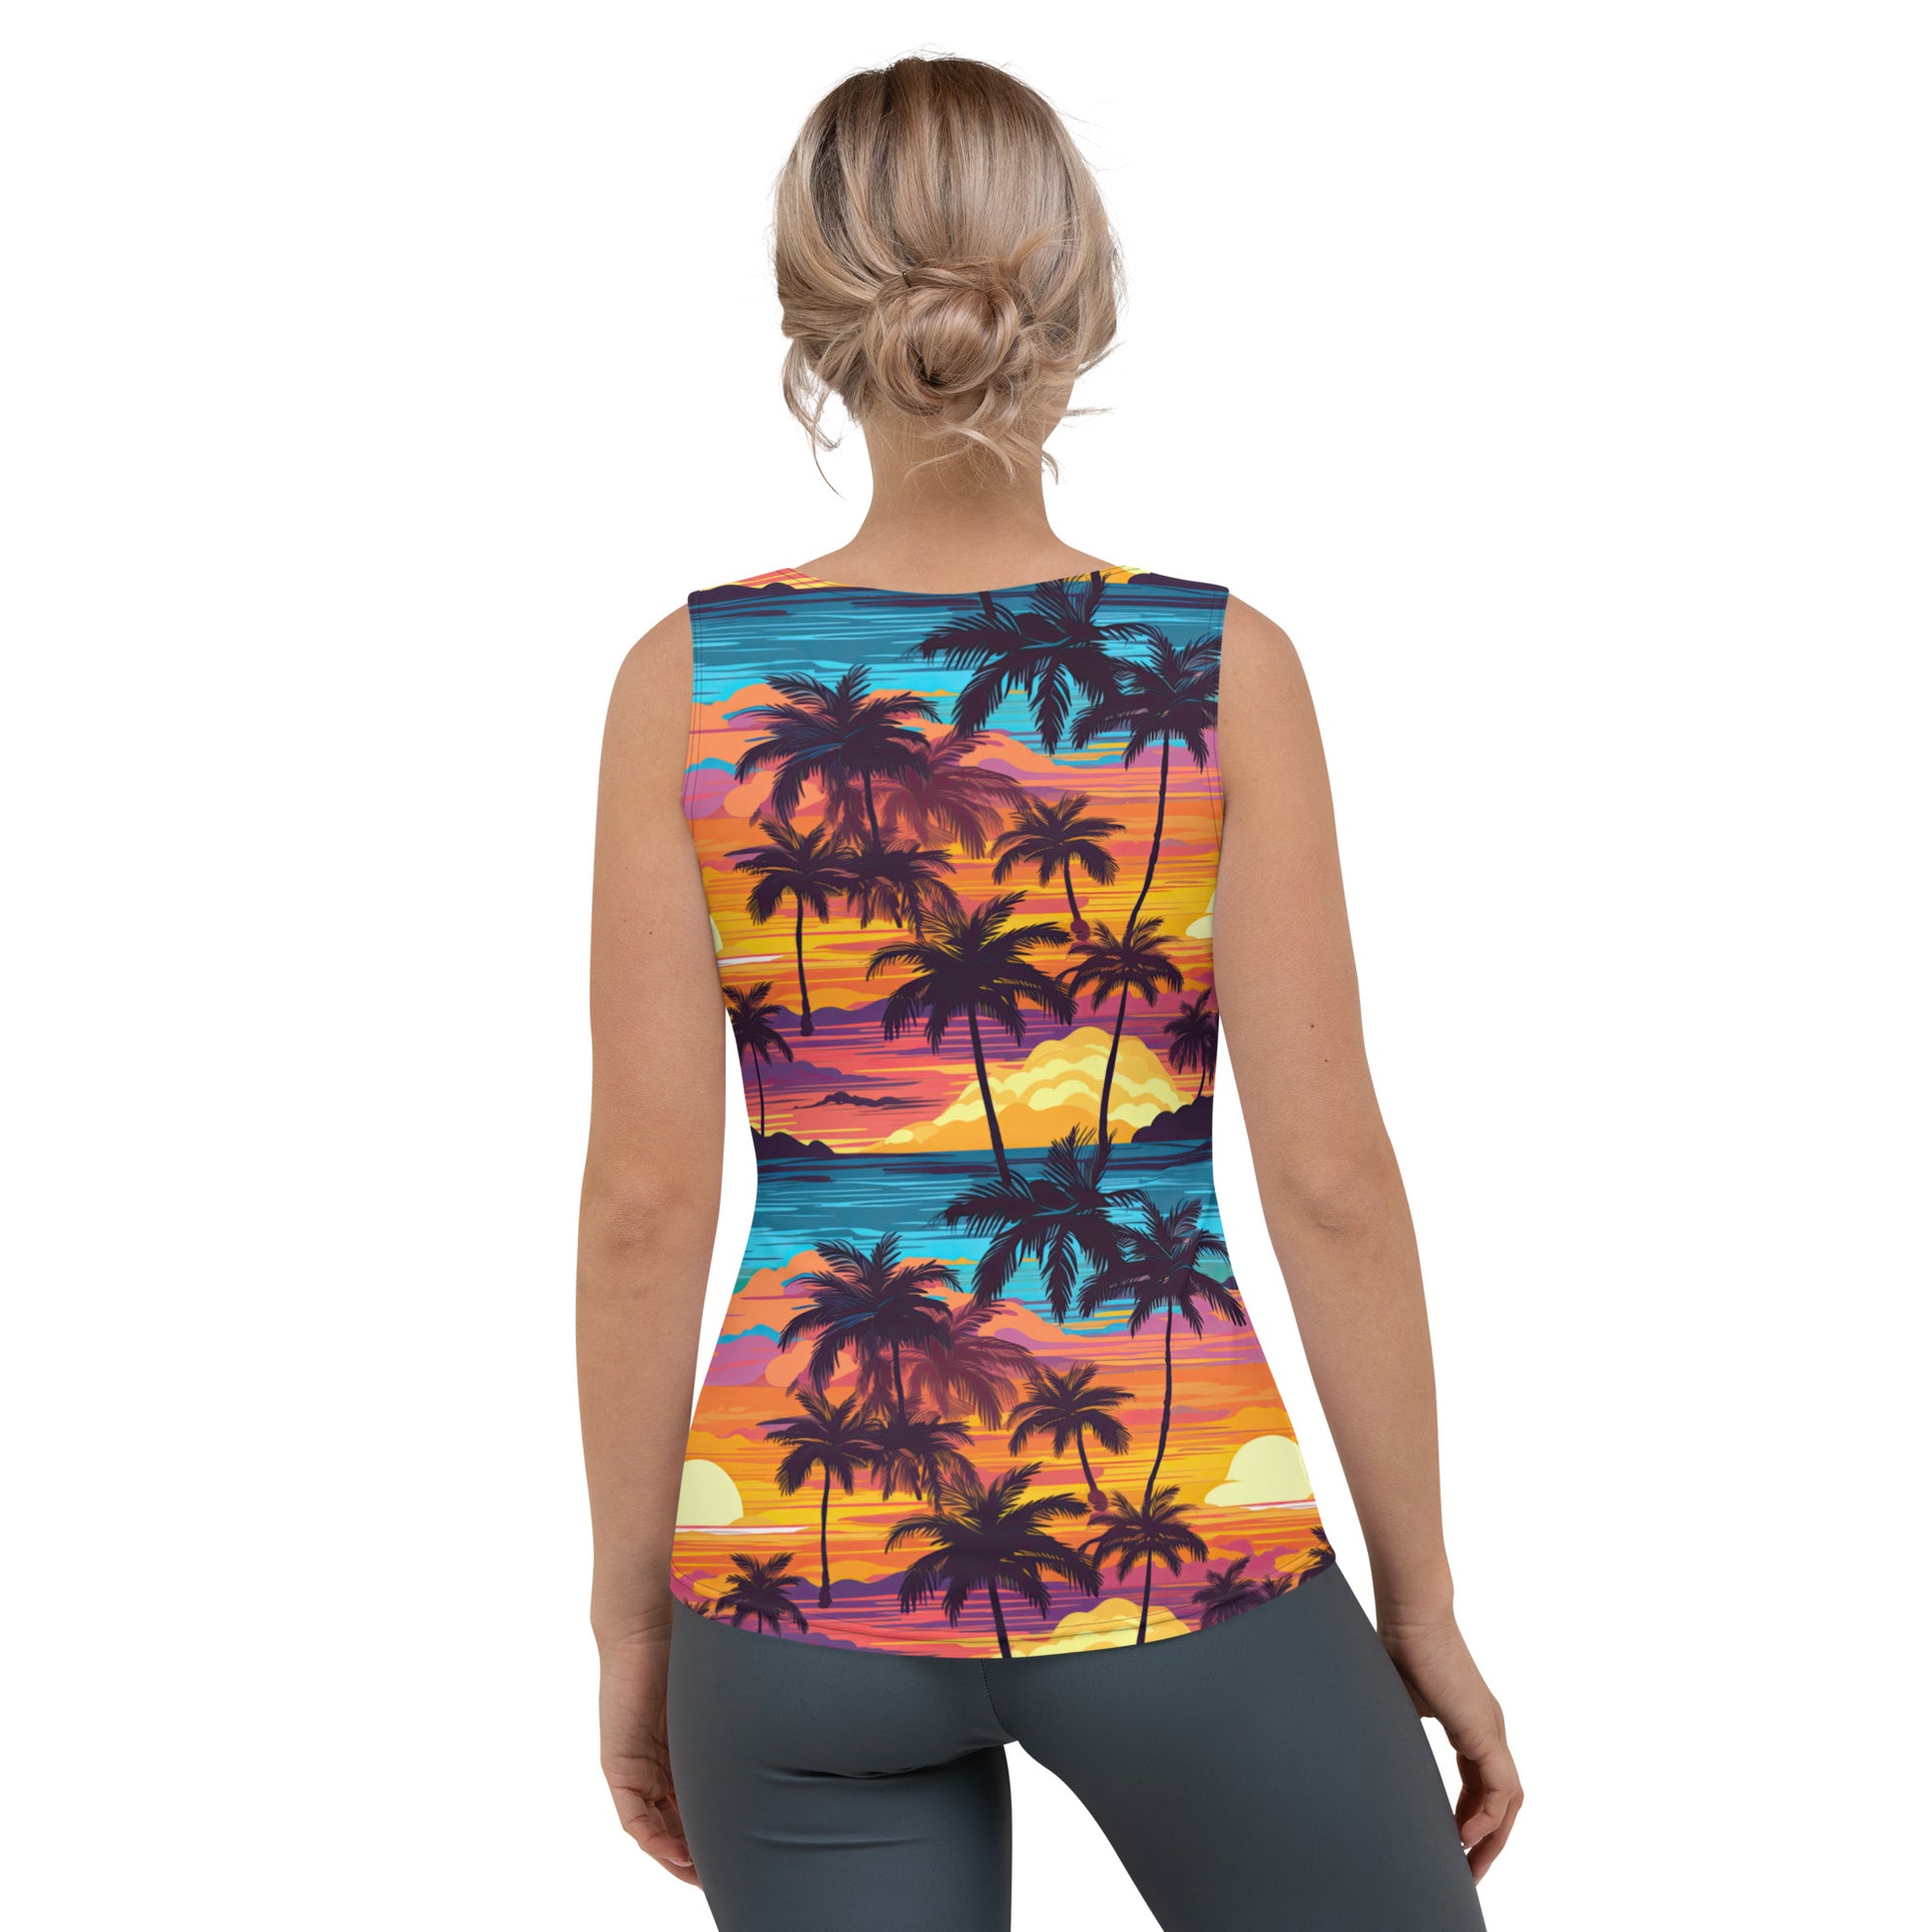 Tropical Sunset w/ Palm Trees Tank Top - Sunshine on the Seas